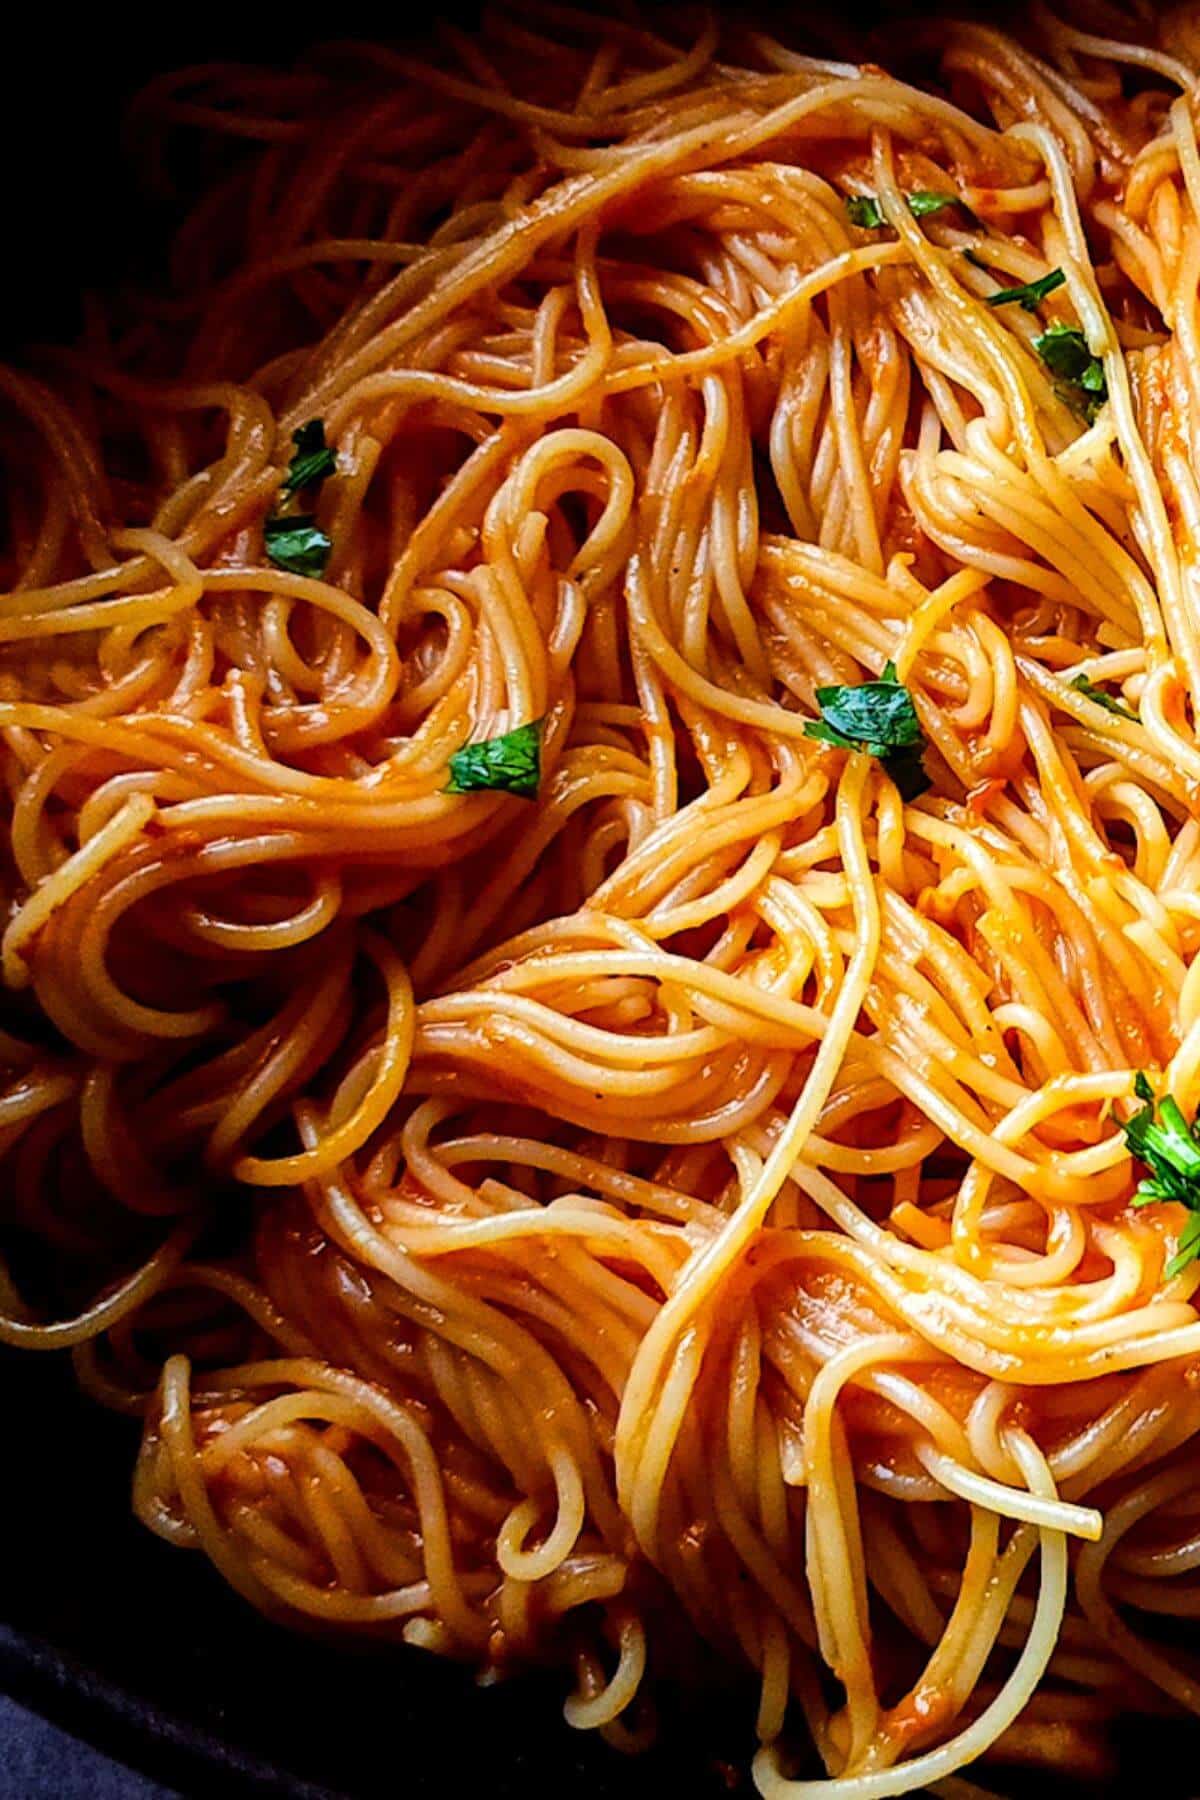 Tomato spaghetti garnished with chopped parsley.